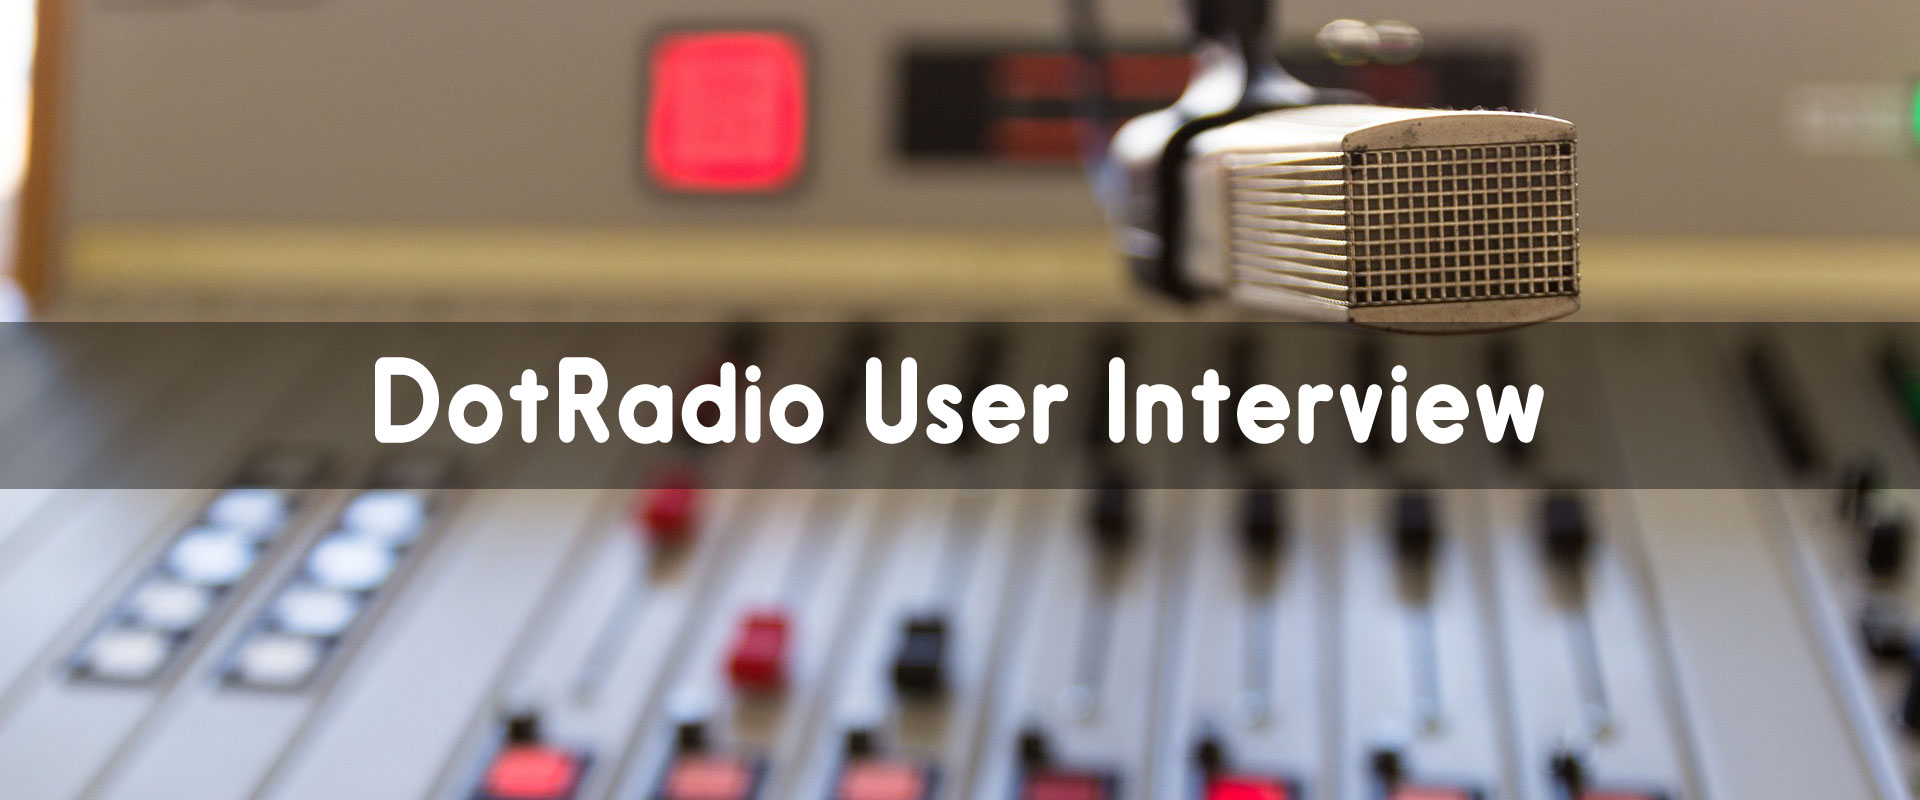 DotRadio User Interview